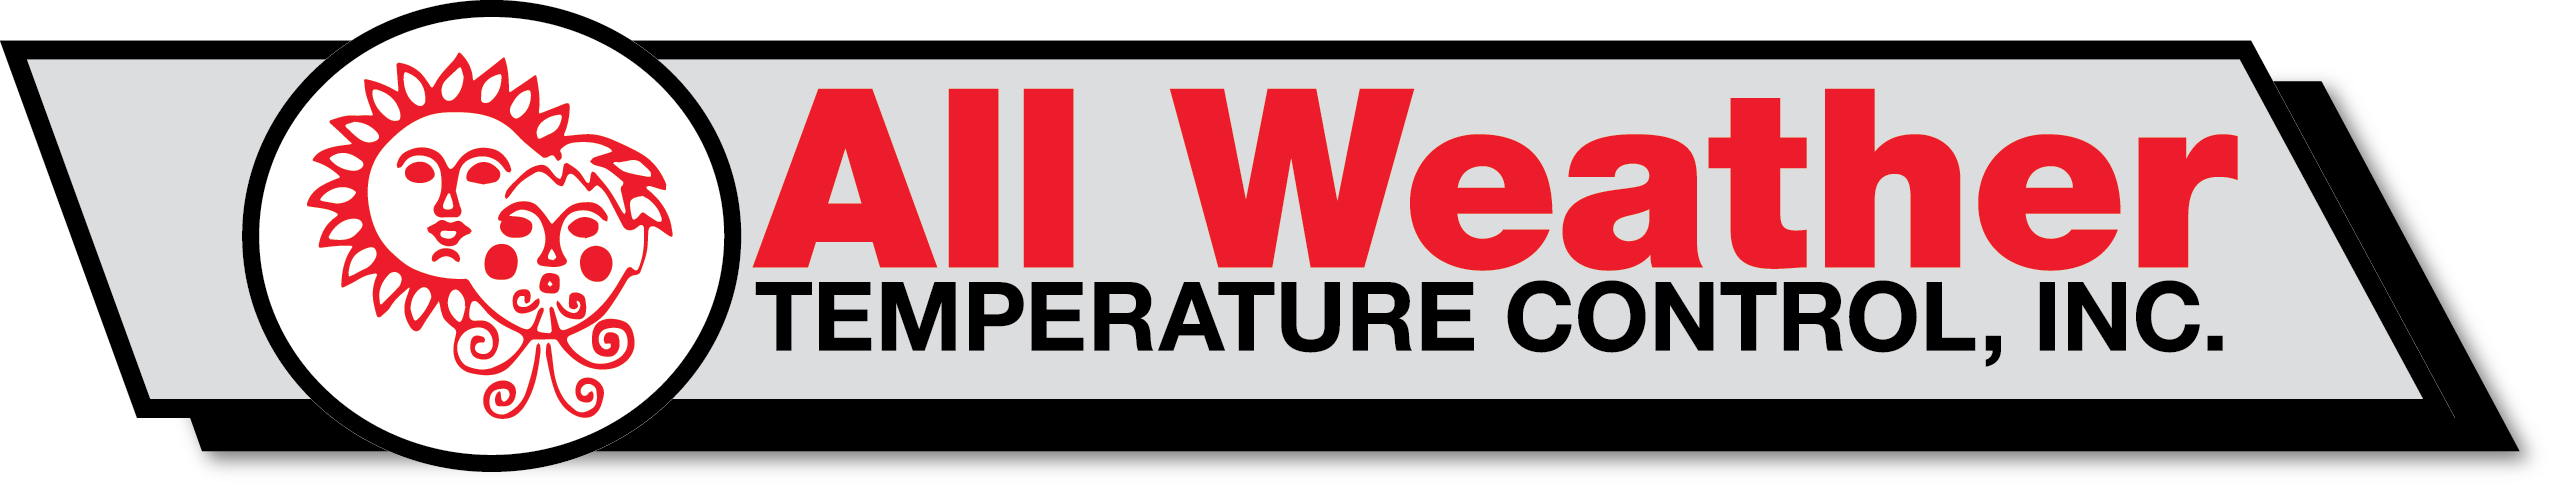 All Weather Temperature Control, Inc. Logo